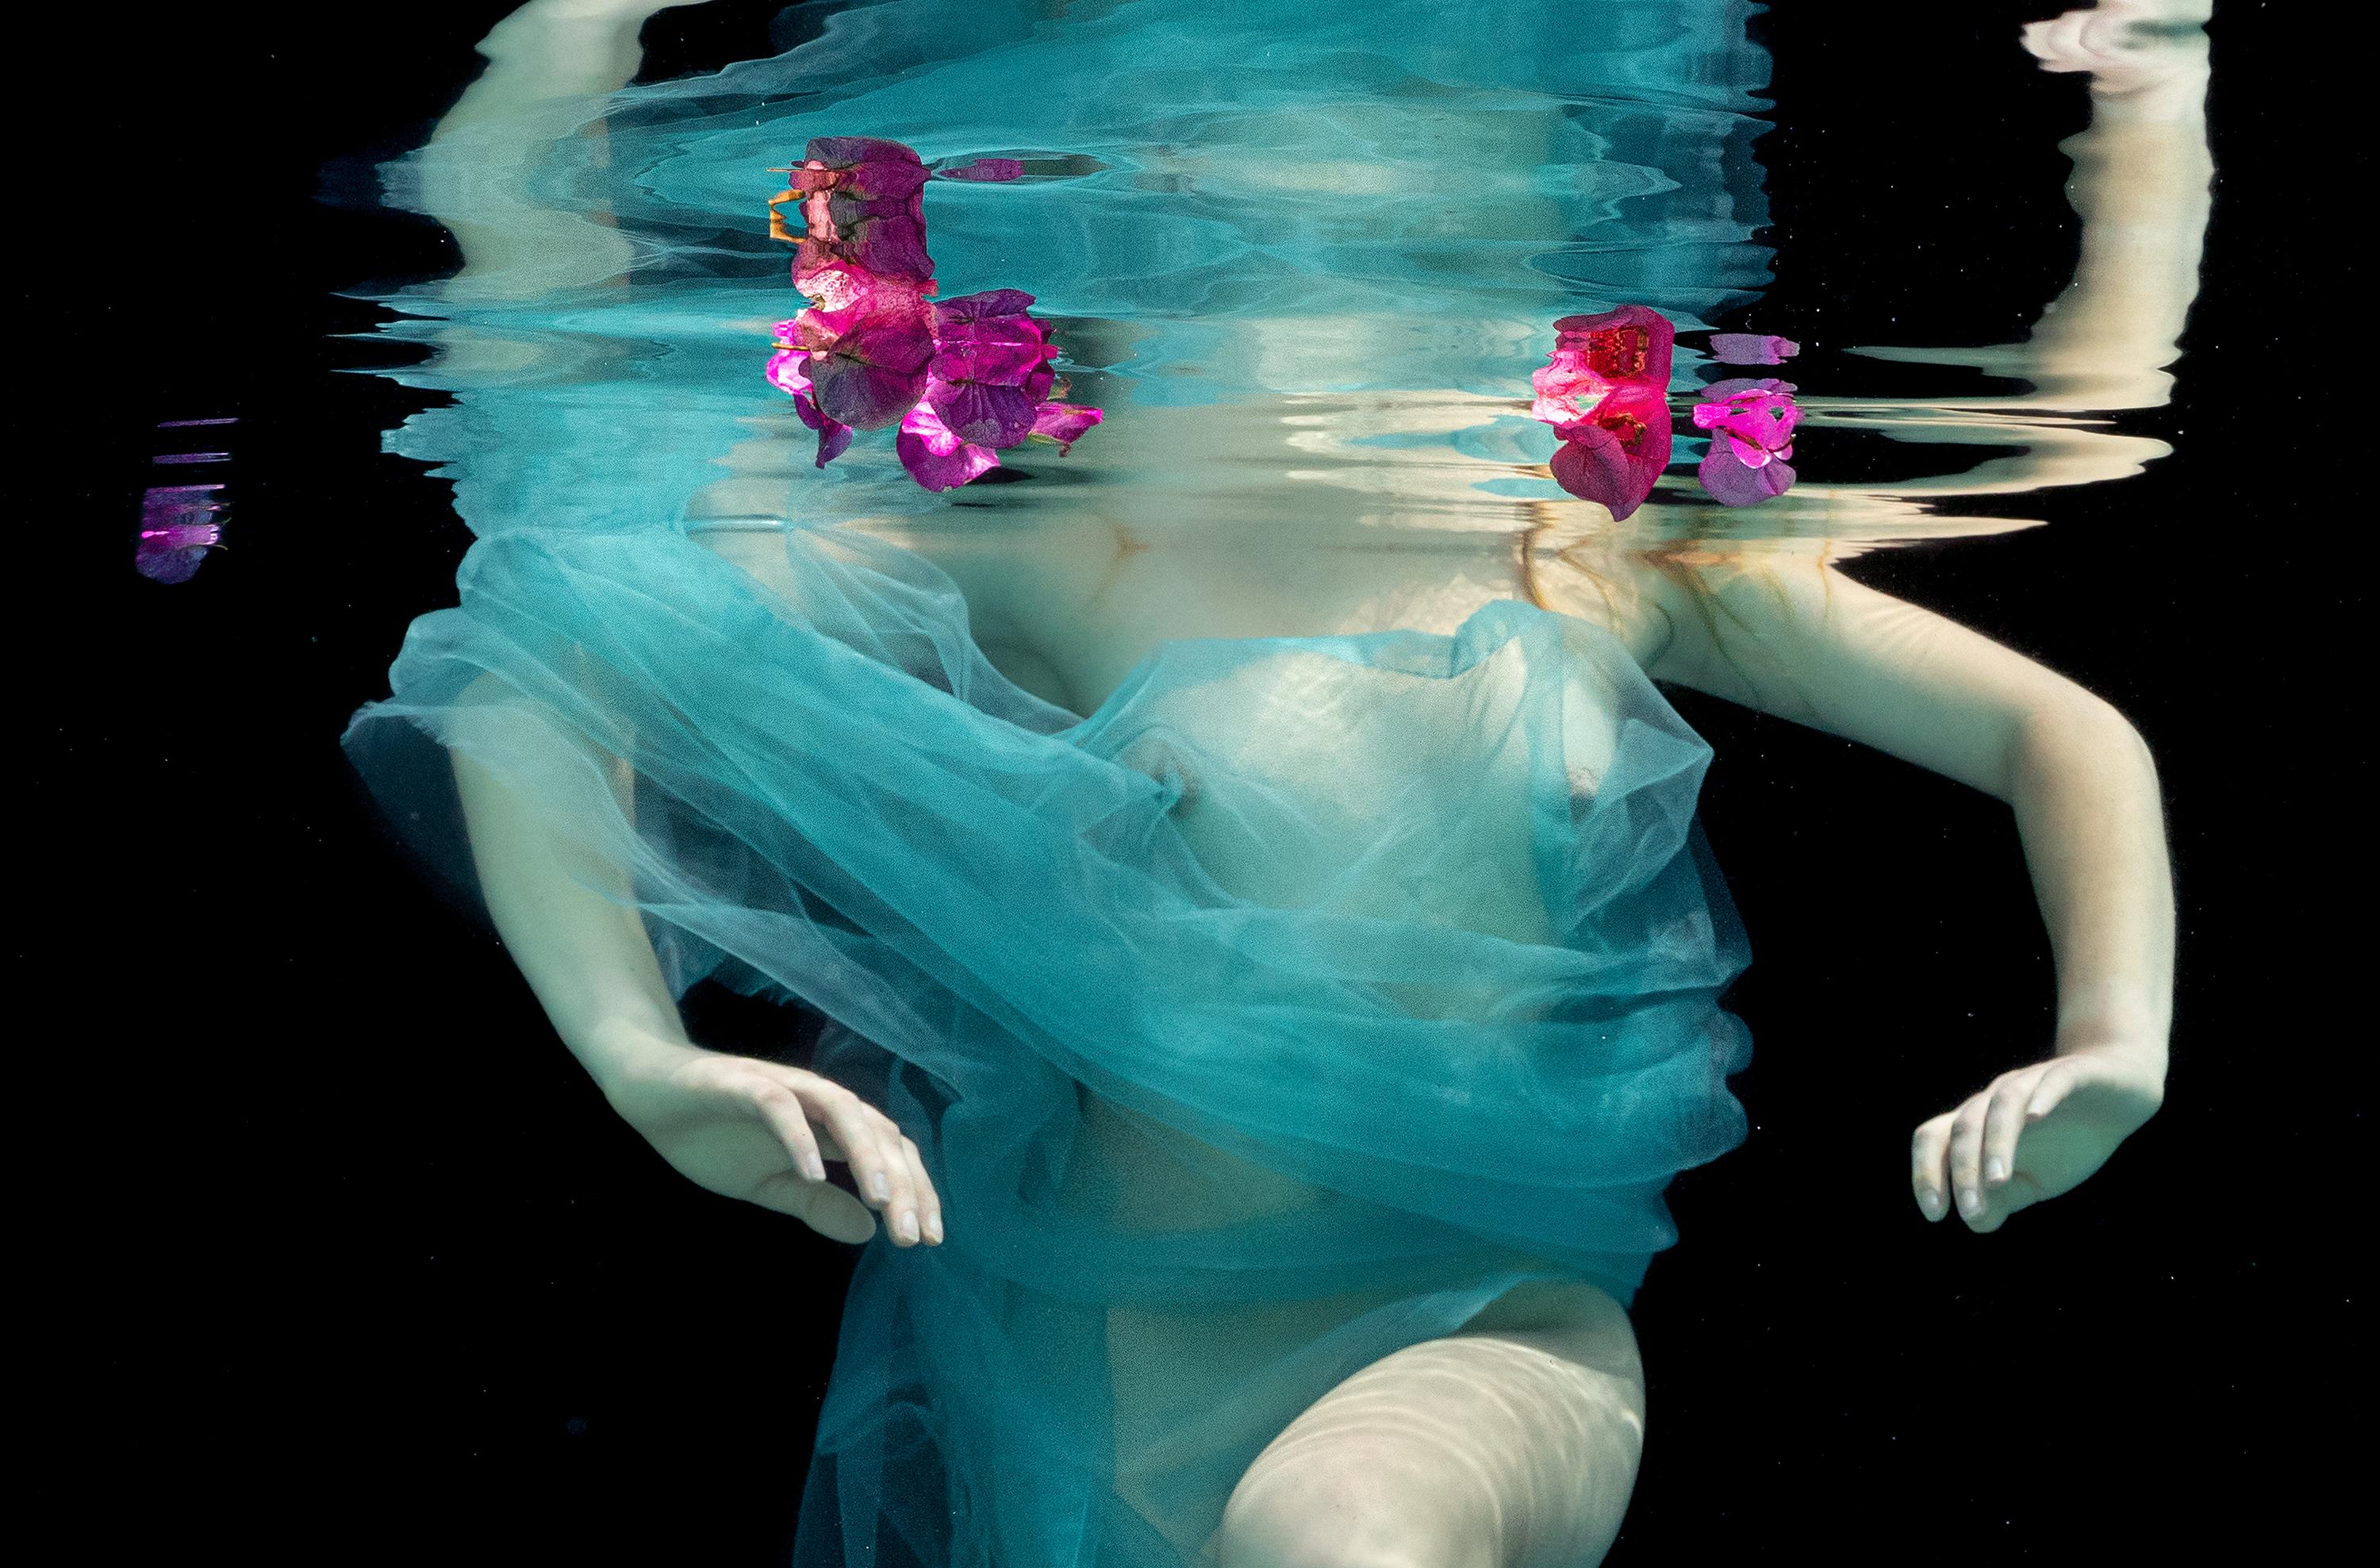 Dancing Flowers - underwater nude photograph - archival pigment 24